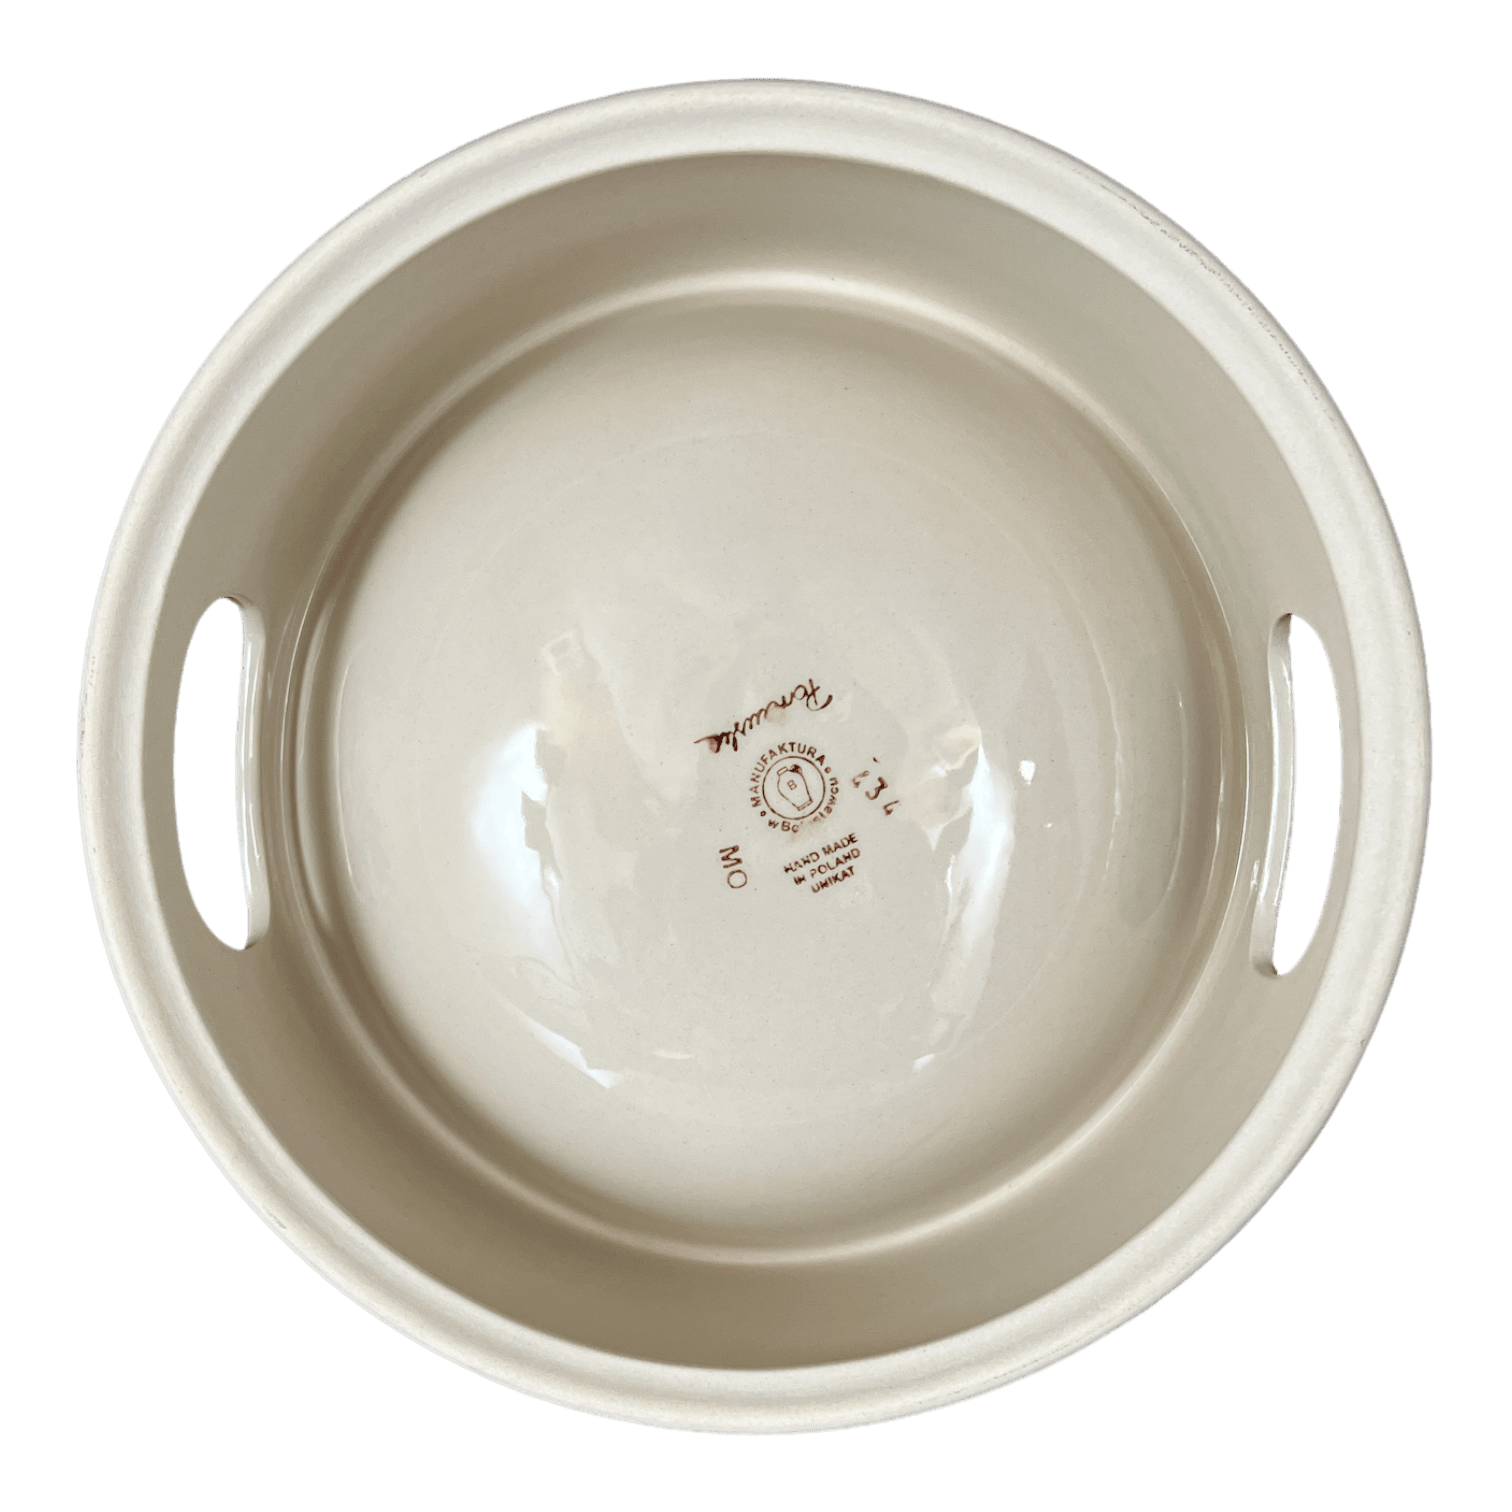  MSBC Big Ceramic Dog Bowl Set (27oz) with Silicone